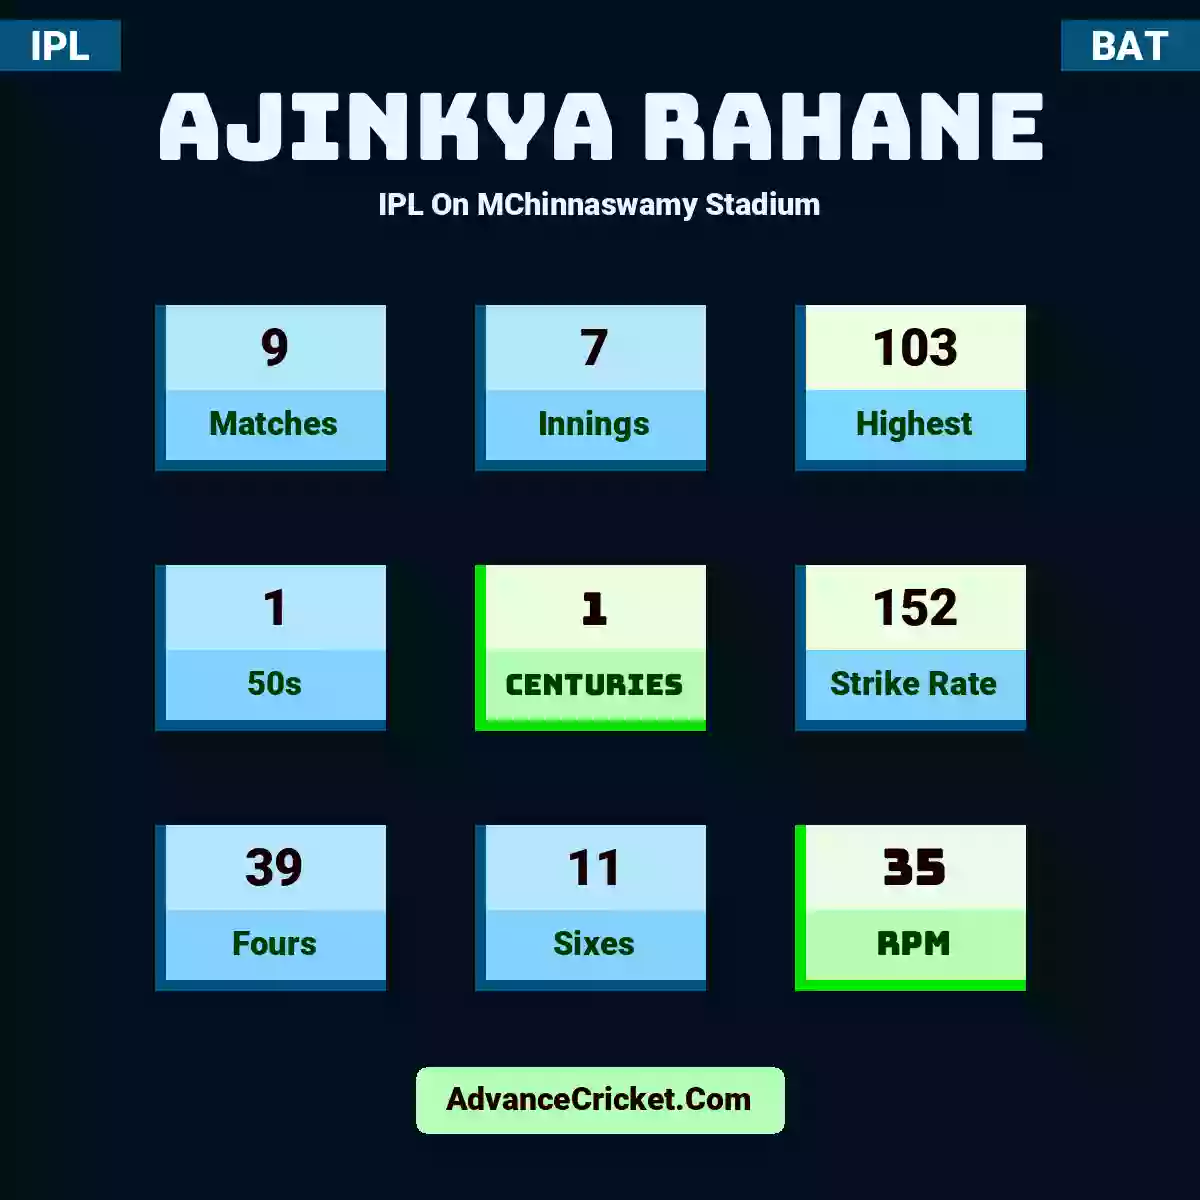 Ajinkya Rahane IPL  On MChinnaswamy Stadium, Ajinkya Rahane played 9 matches, scored 103 runs as highest, 1 half-centuries, and 1 centuries, with a strike rate of 152. A.Rahane hit 39 fours and 11 sixes, with an RPM of 35.